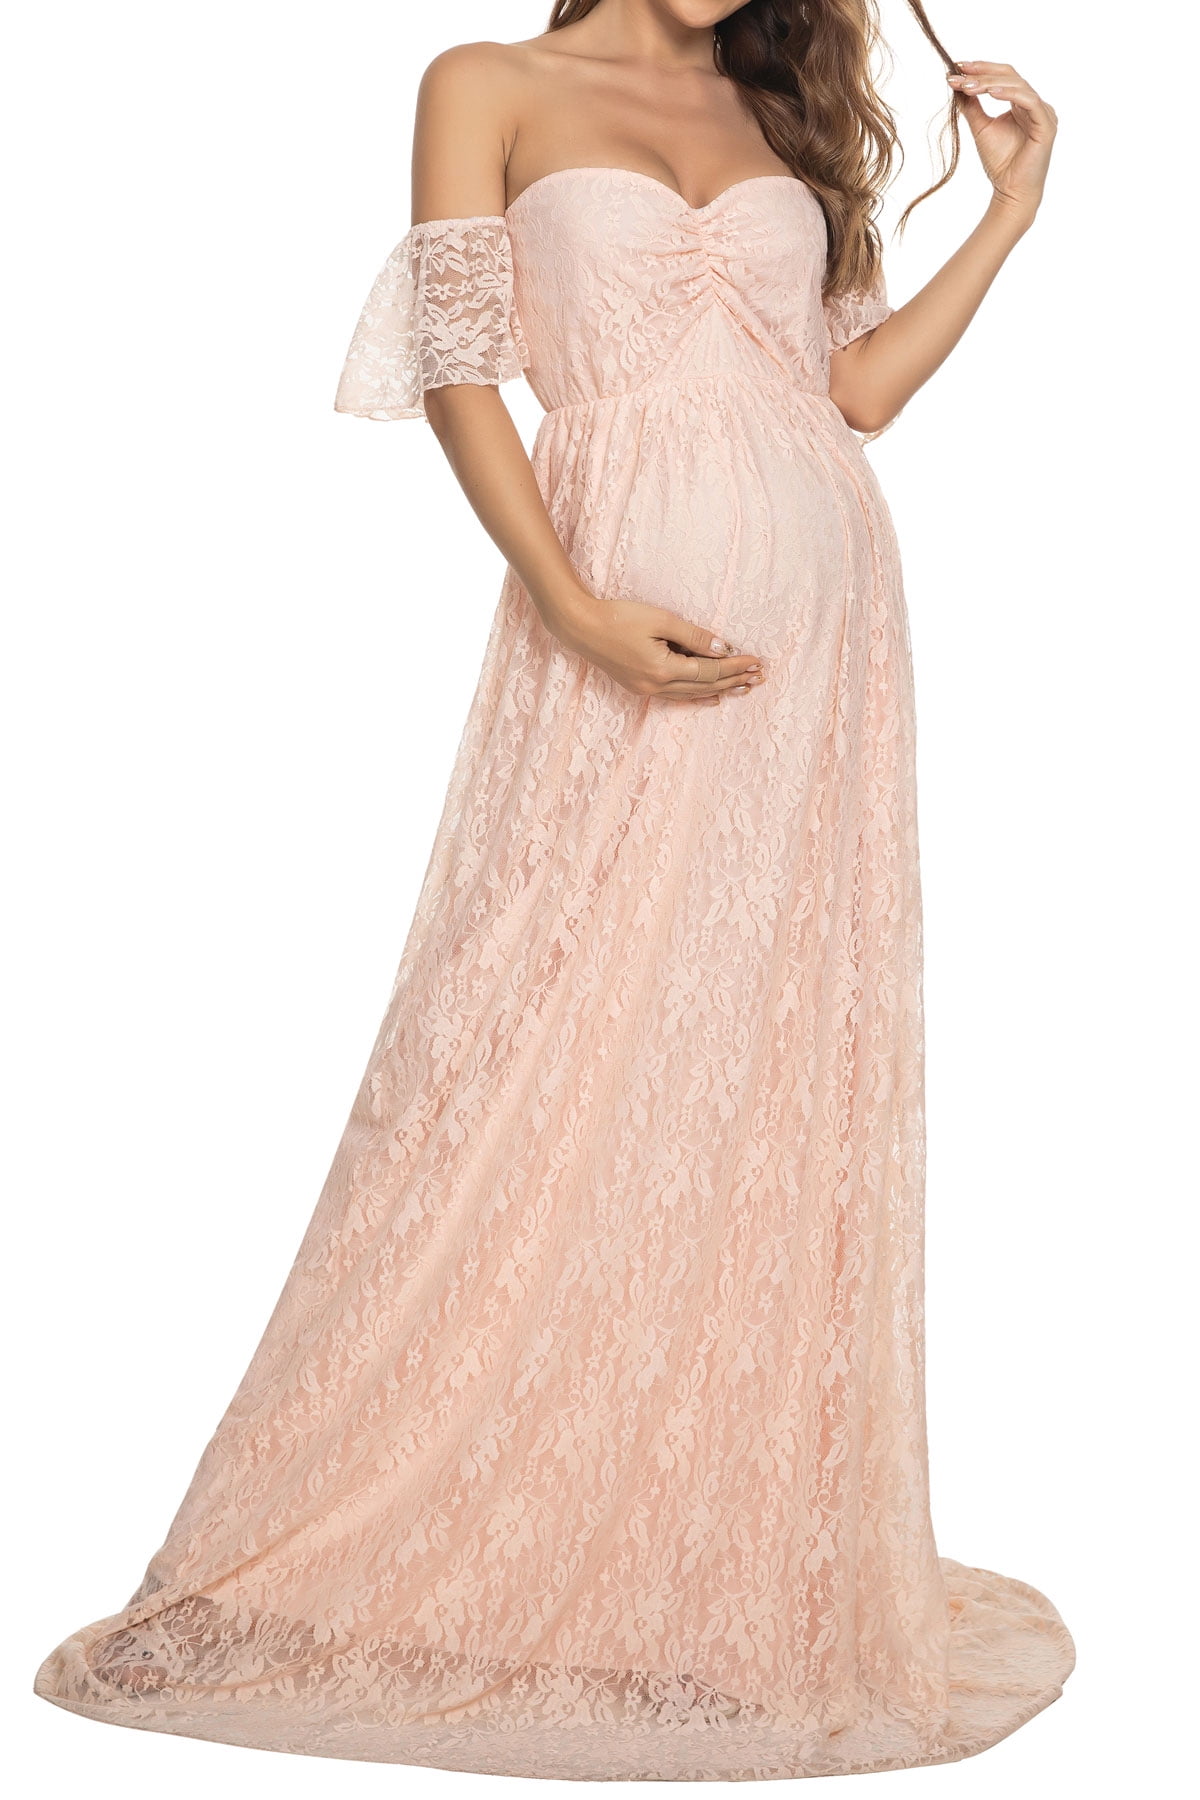 Lace Gothic Wedding Womens Design Maternity Short Sleeve Casual Babyshower New 